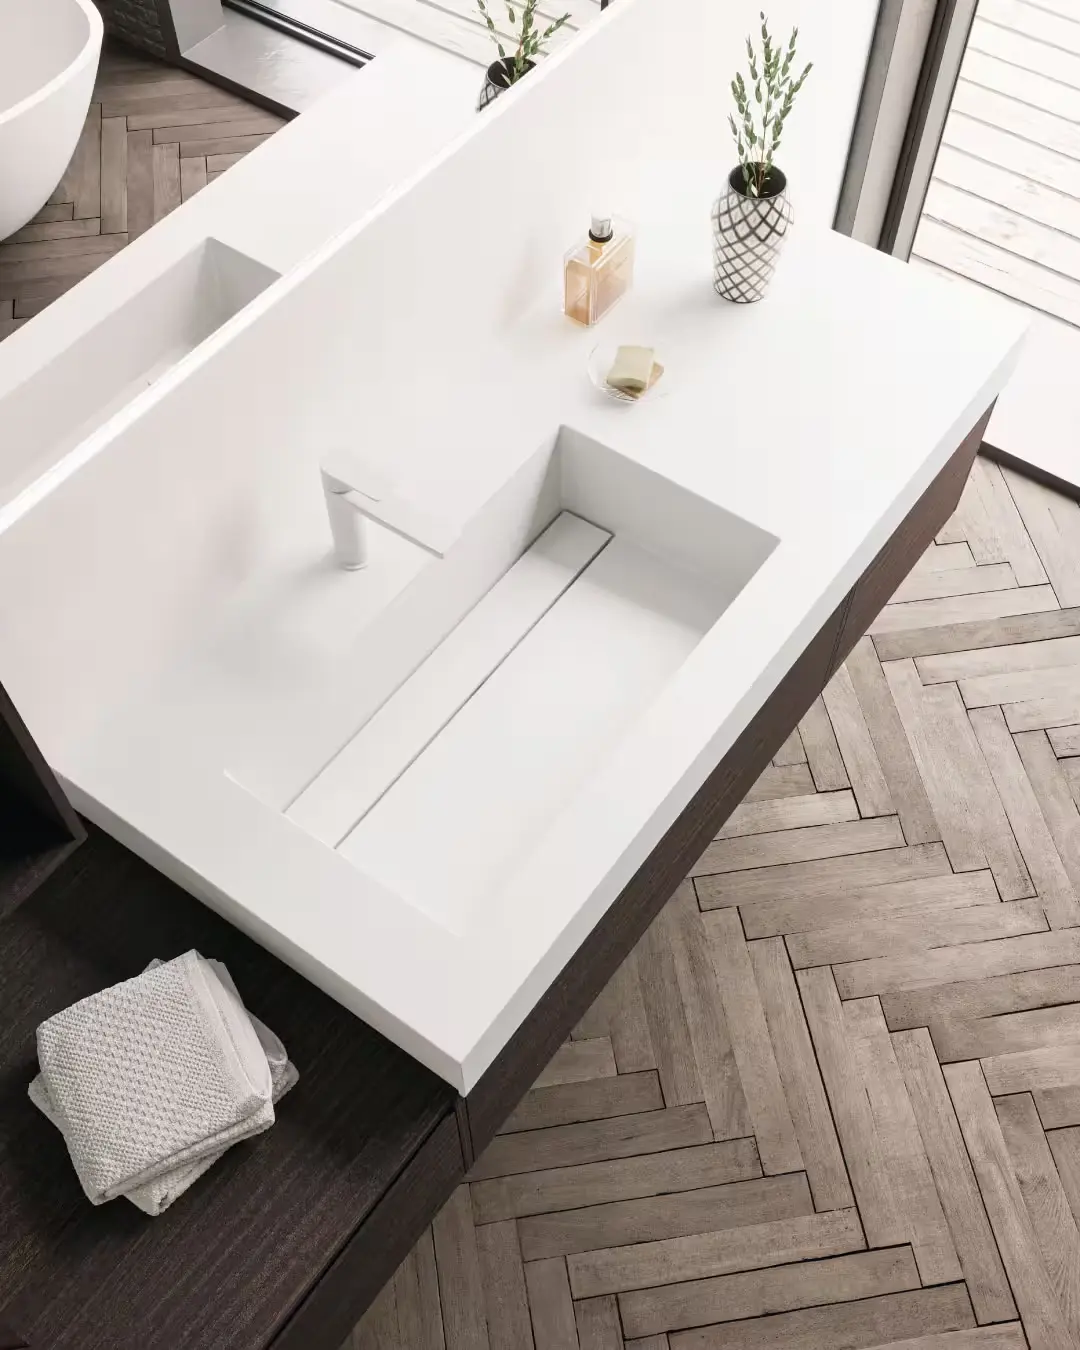 corian-bathroom-sink